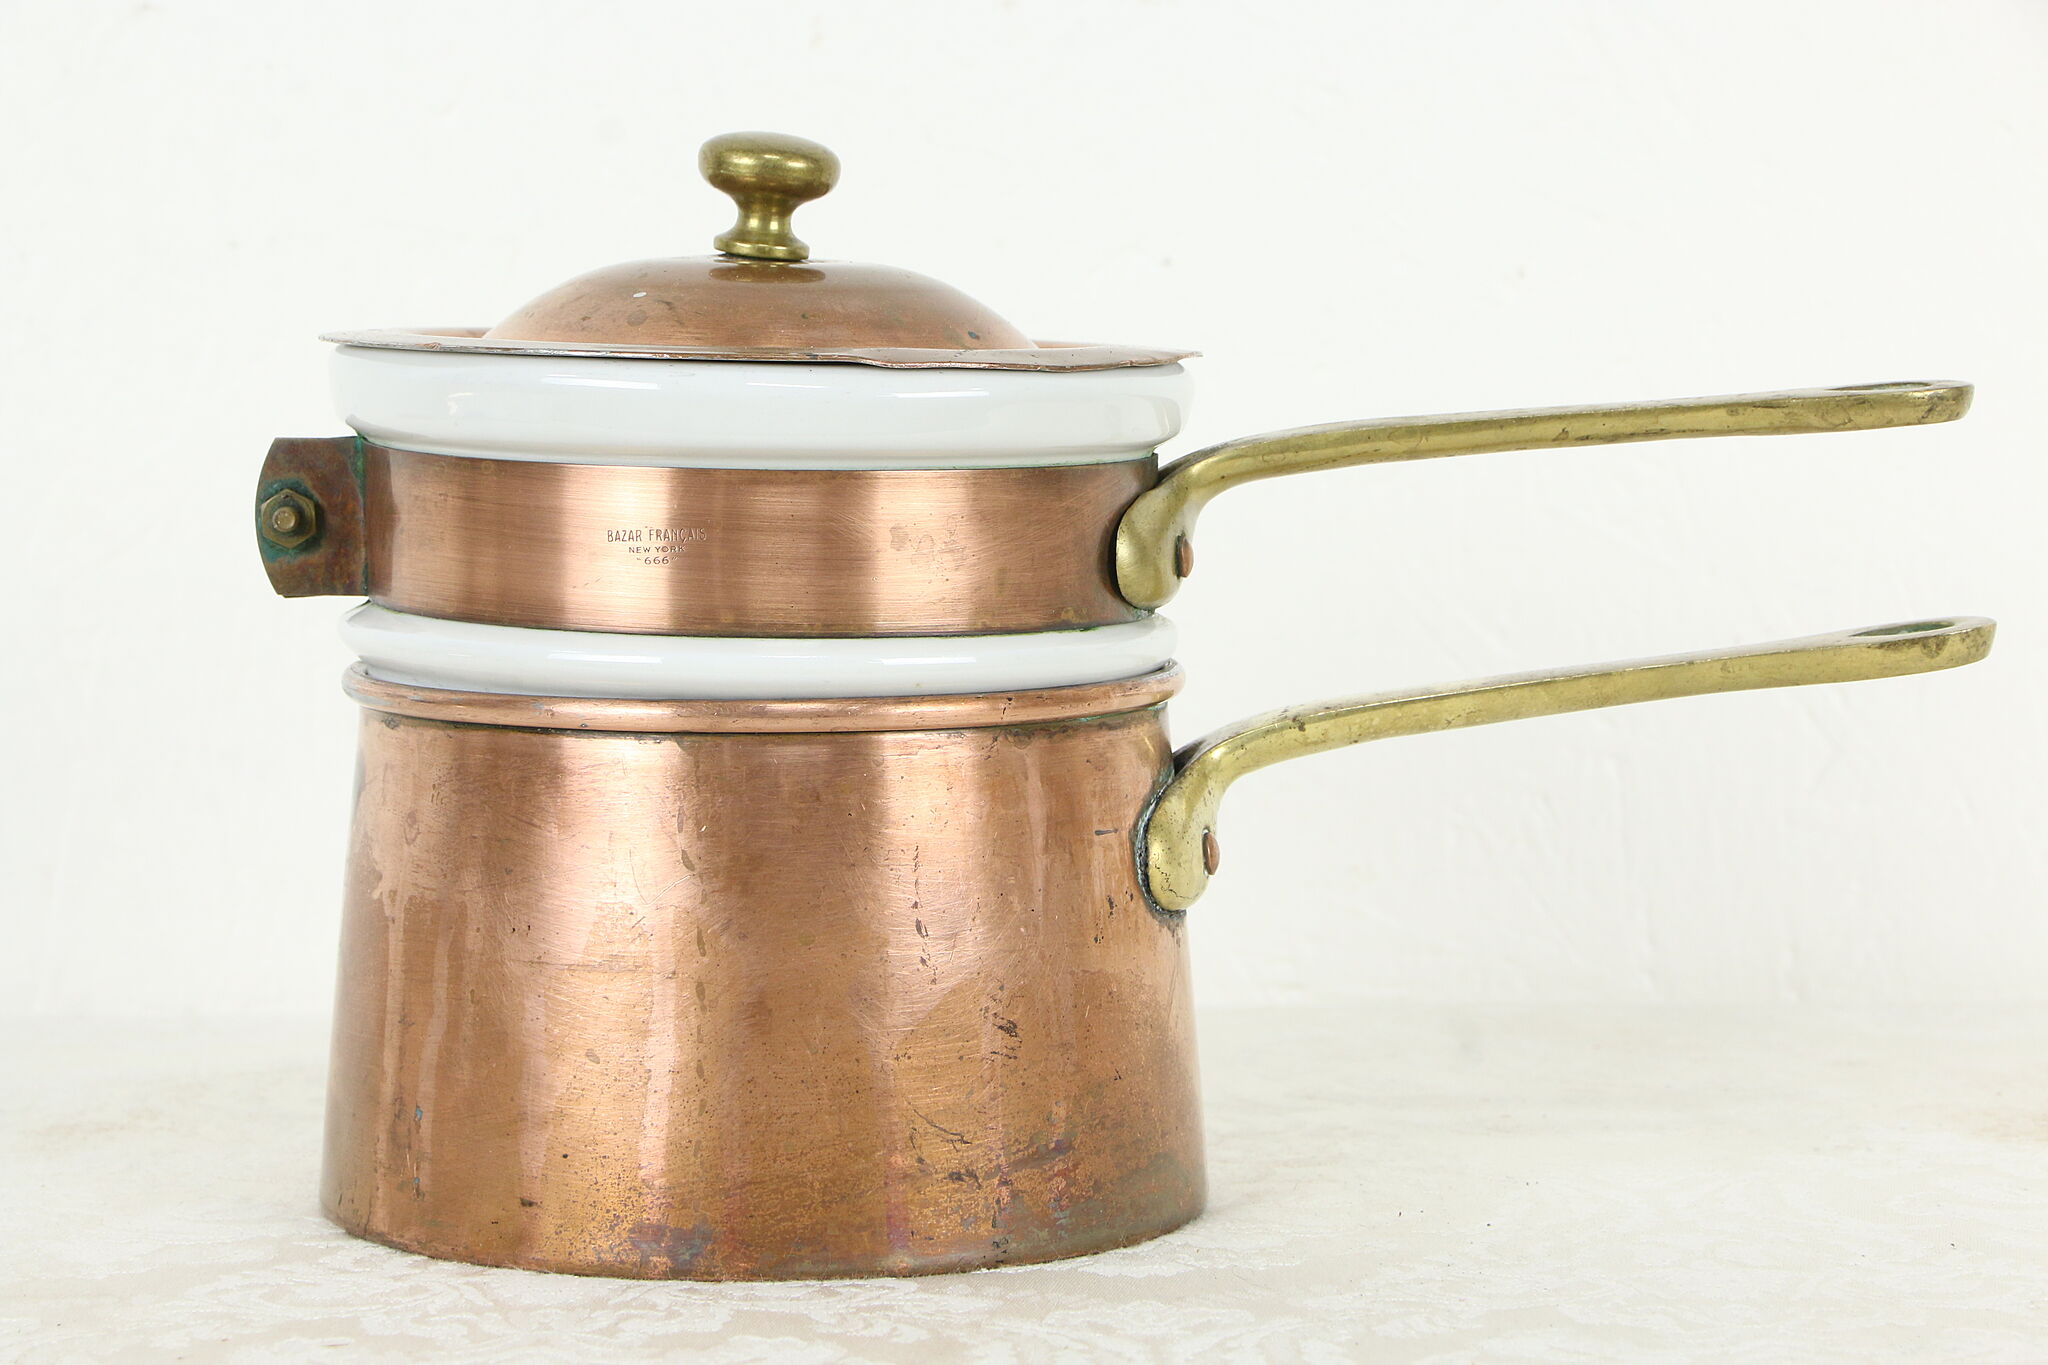 Copper Antique Fondue Pot or Double Boiler, Hall, Bazar Francaise